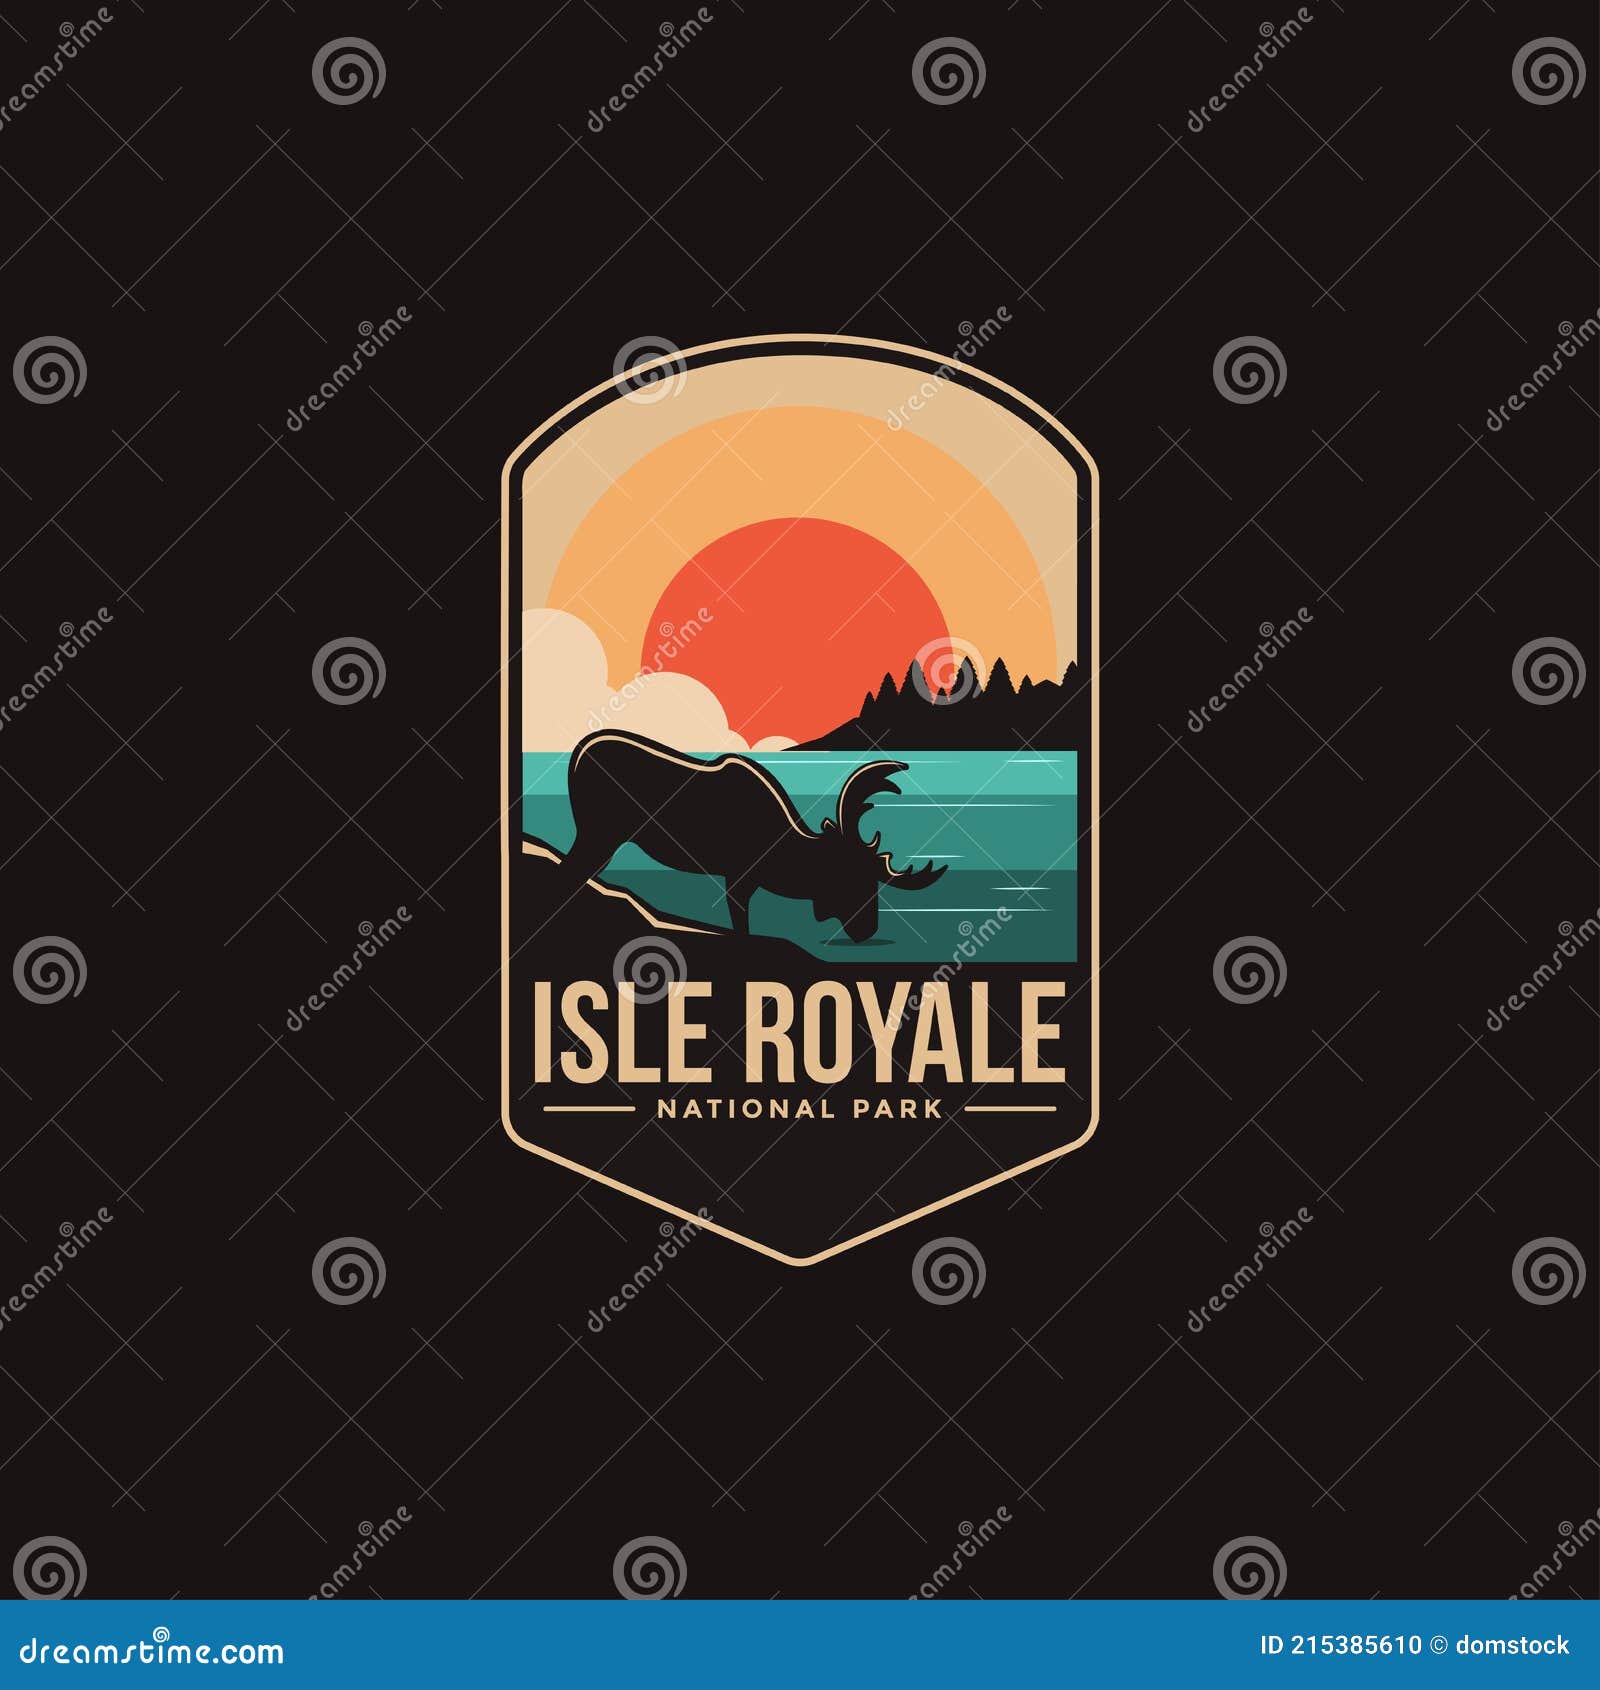 emblem patch logo  of isle royale national park